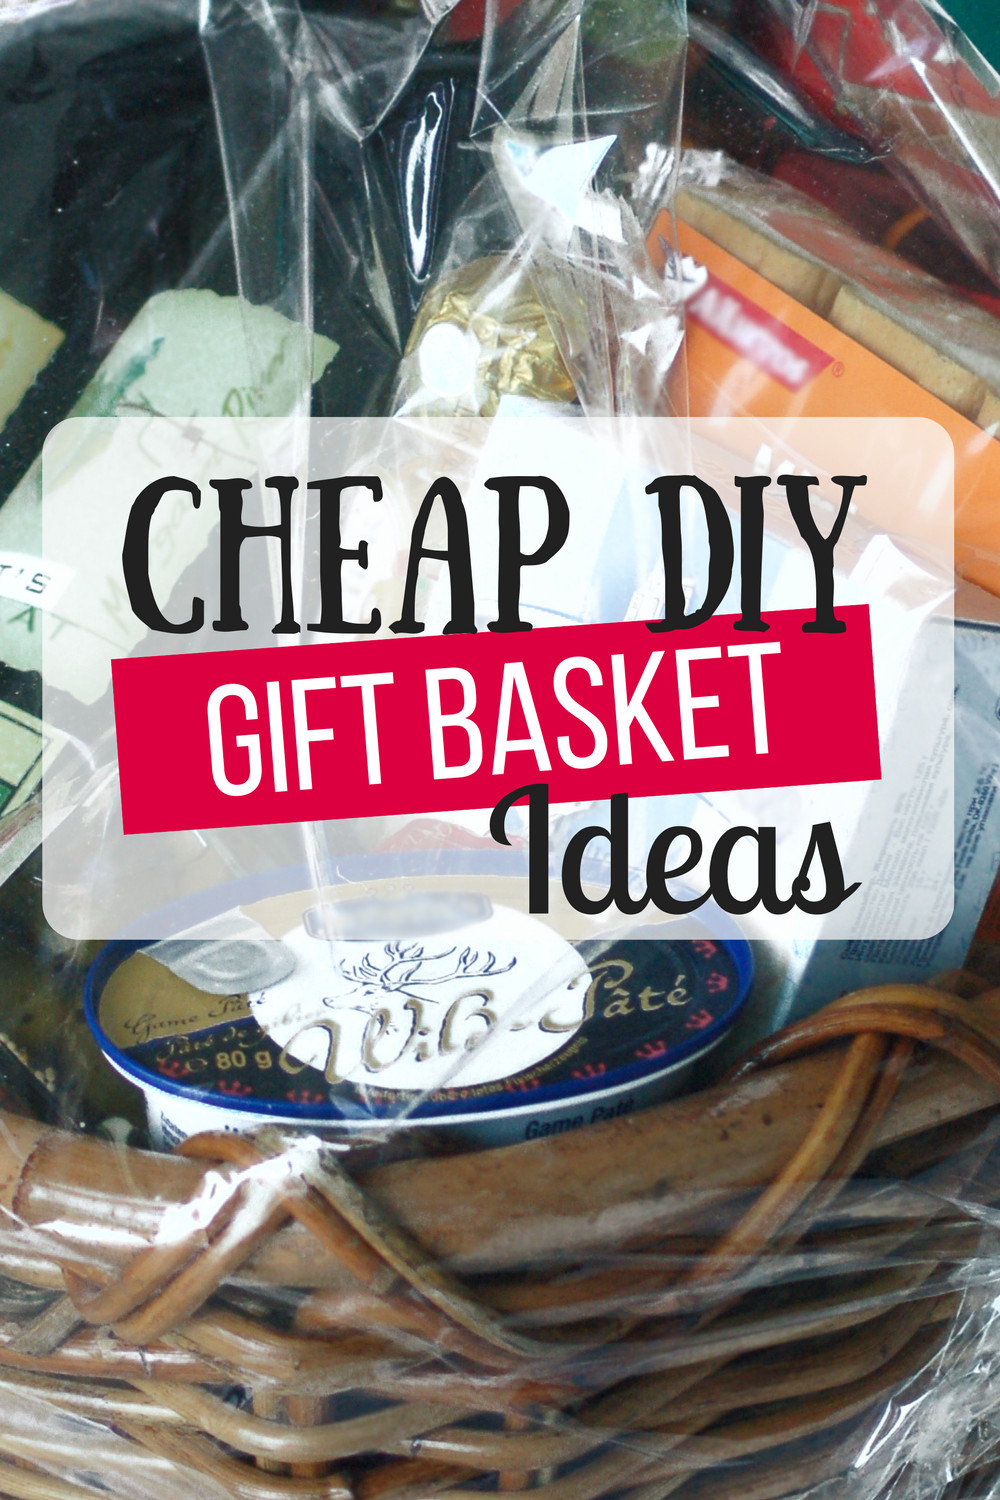 Diy Christmas Gift Basket Ideas
 Cheap DIY Gift Baskets The Busy Bud er